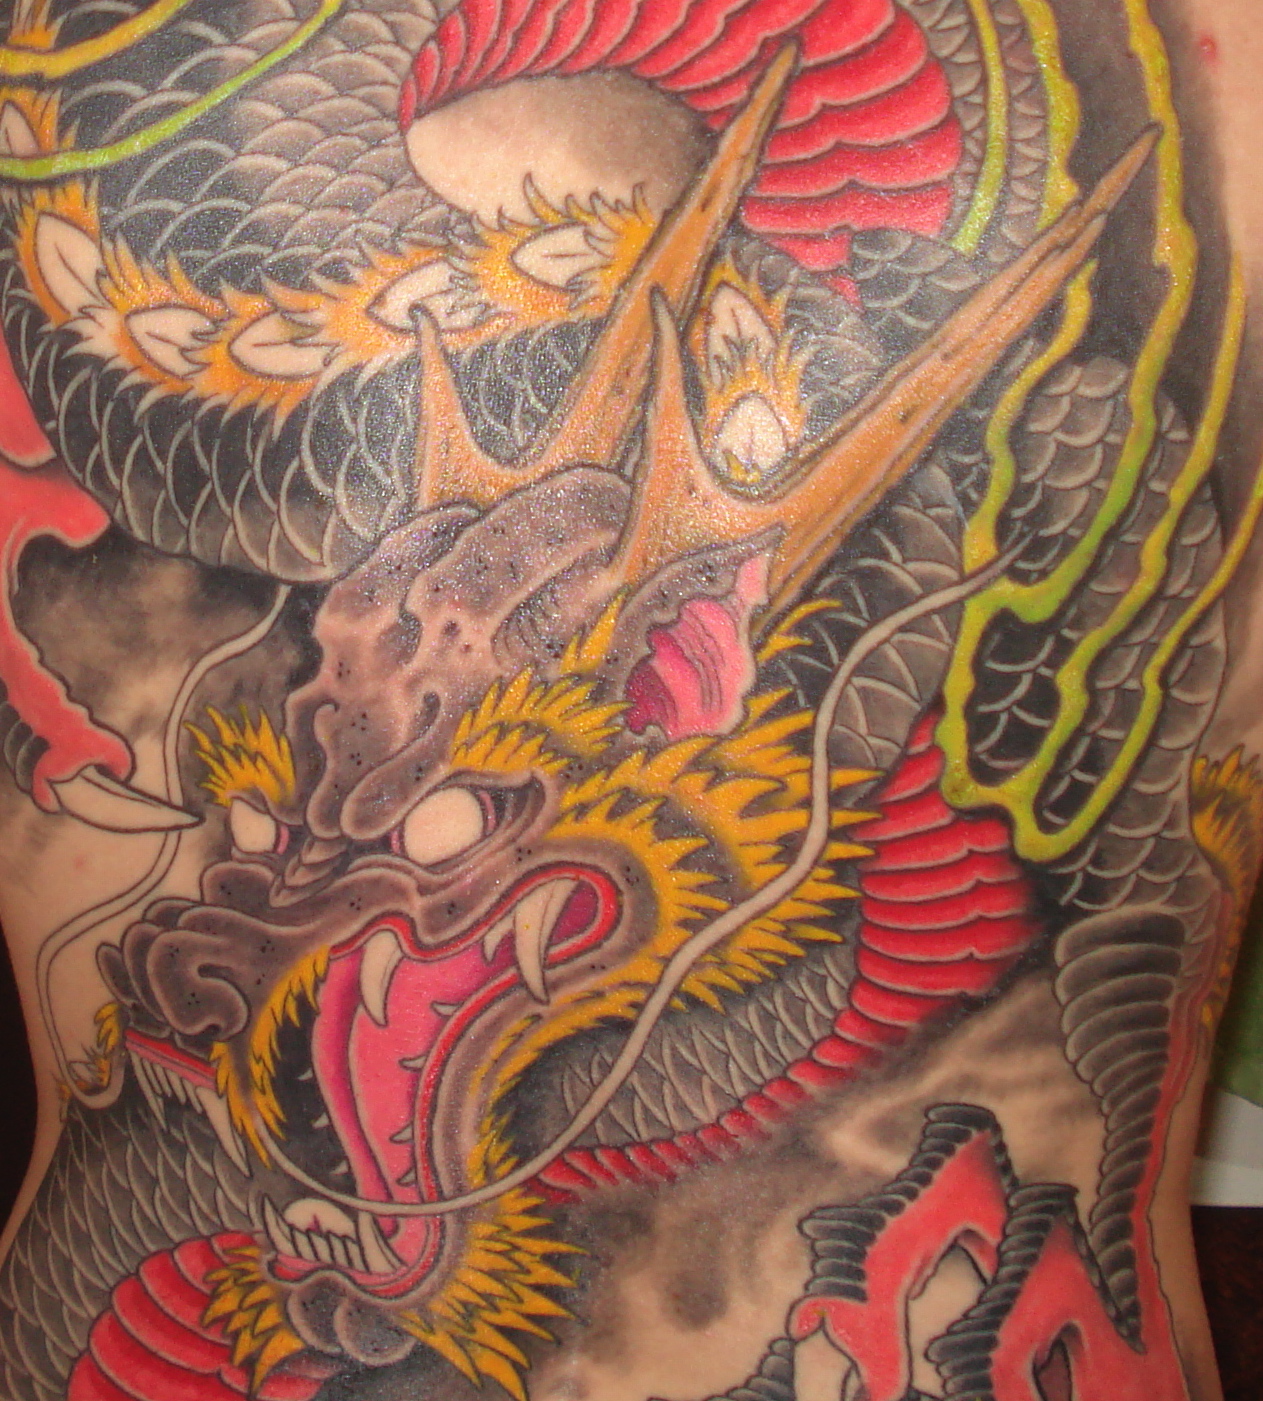 http://2.bp.blogspot.com/-a2FbUdeon9Q/TZyRhGj4IBI/AAAAAAAAAOc/lhoYvds0MoU/s1600/dragon-tattoo+%25281%2529.jpg